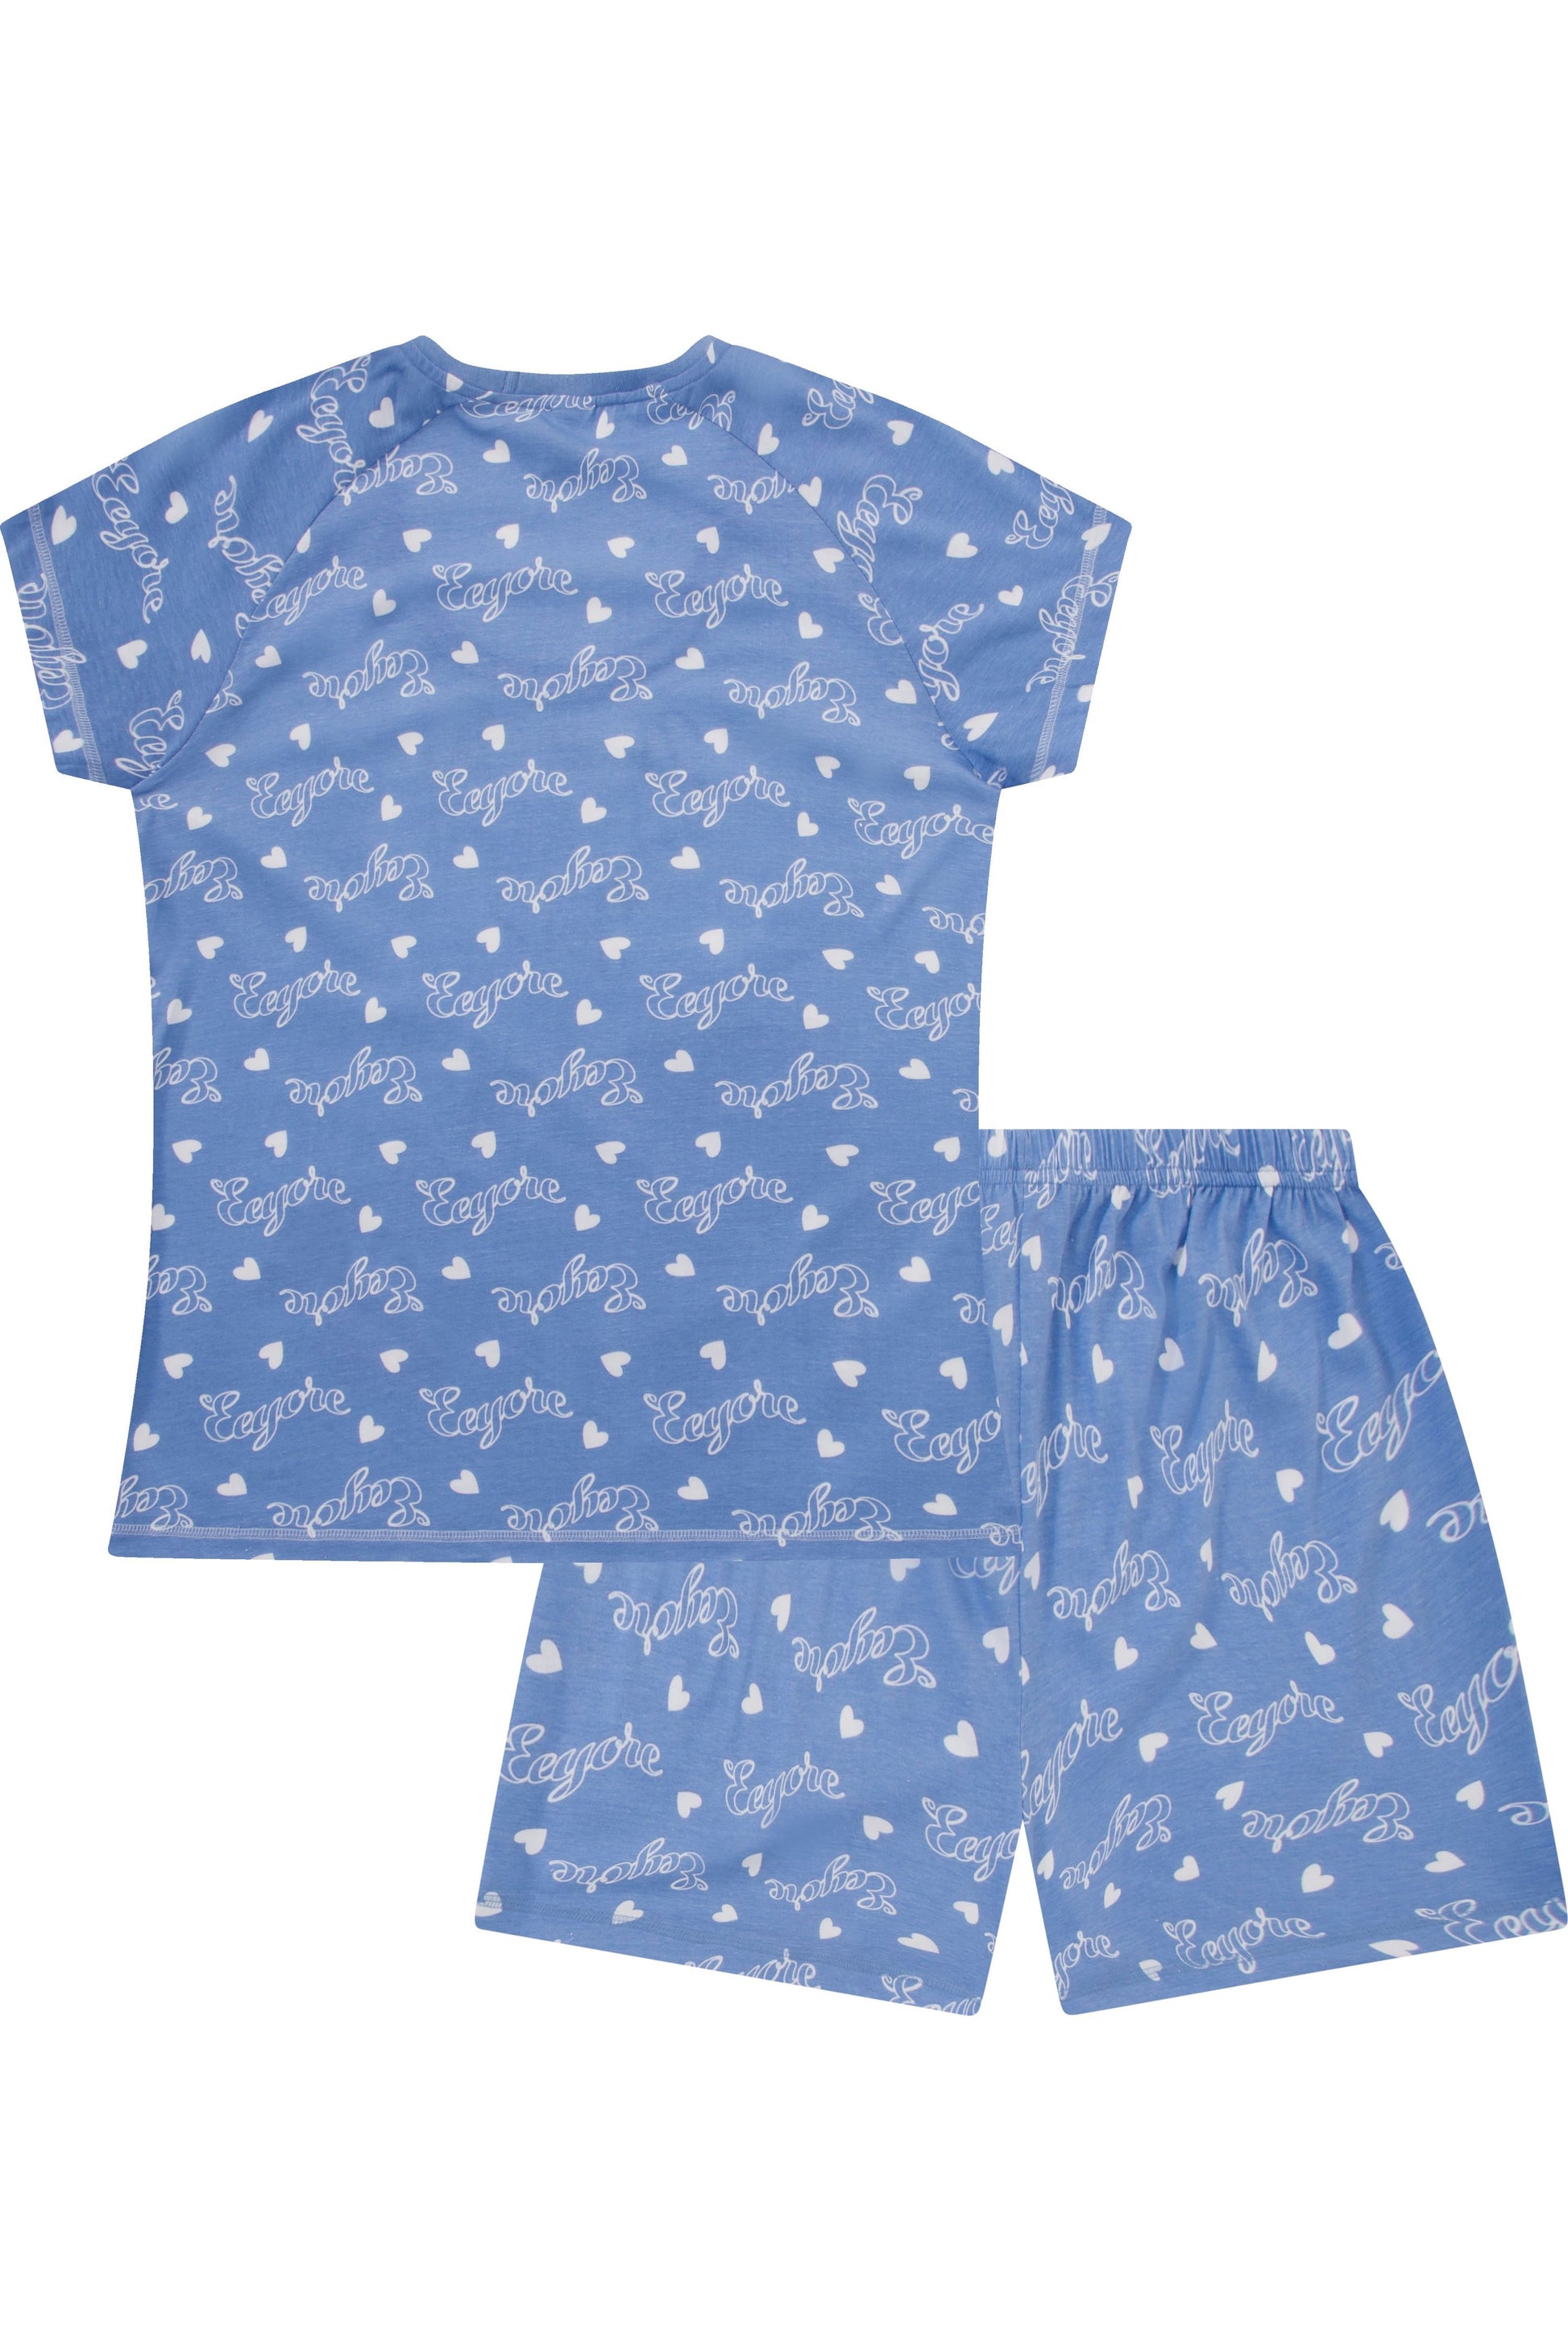 Disney Ladies Eeyore Short Pyjamas - Pyjamas.com